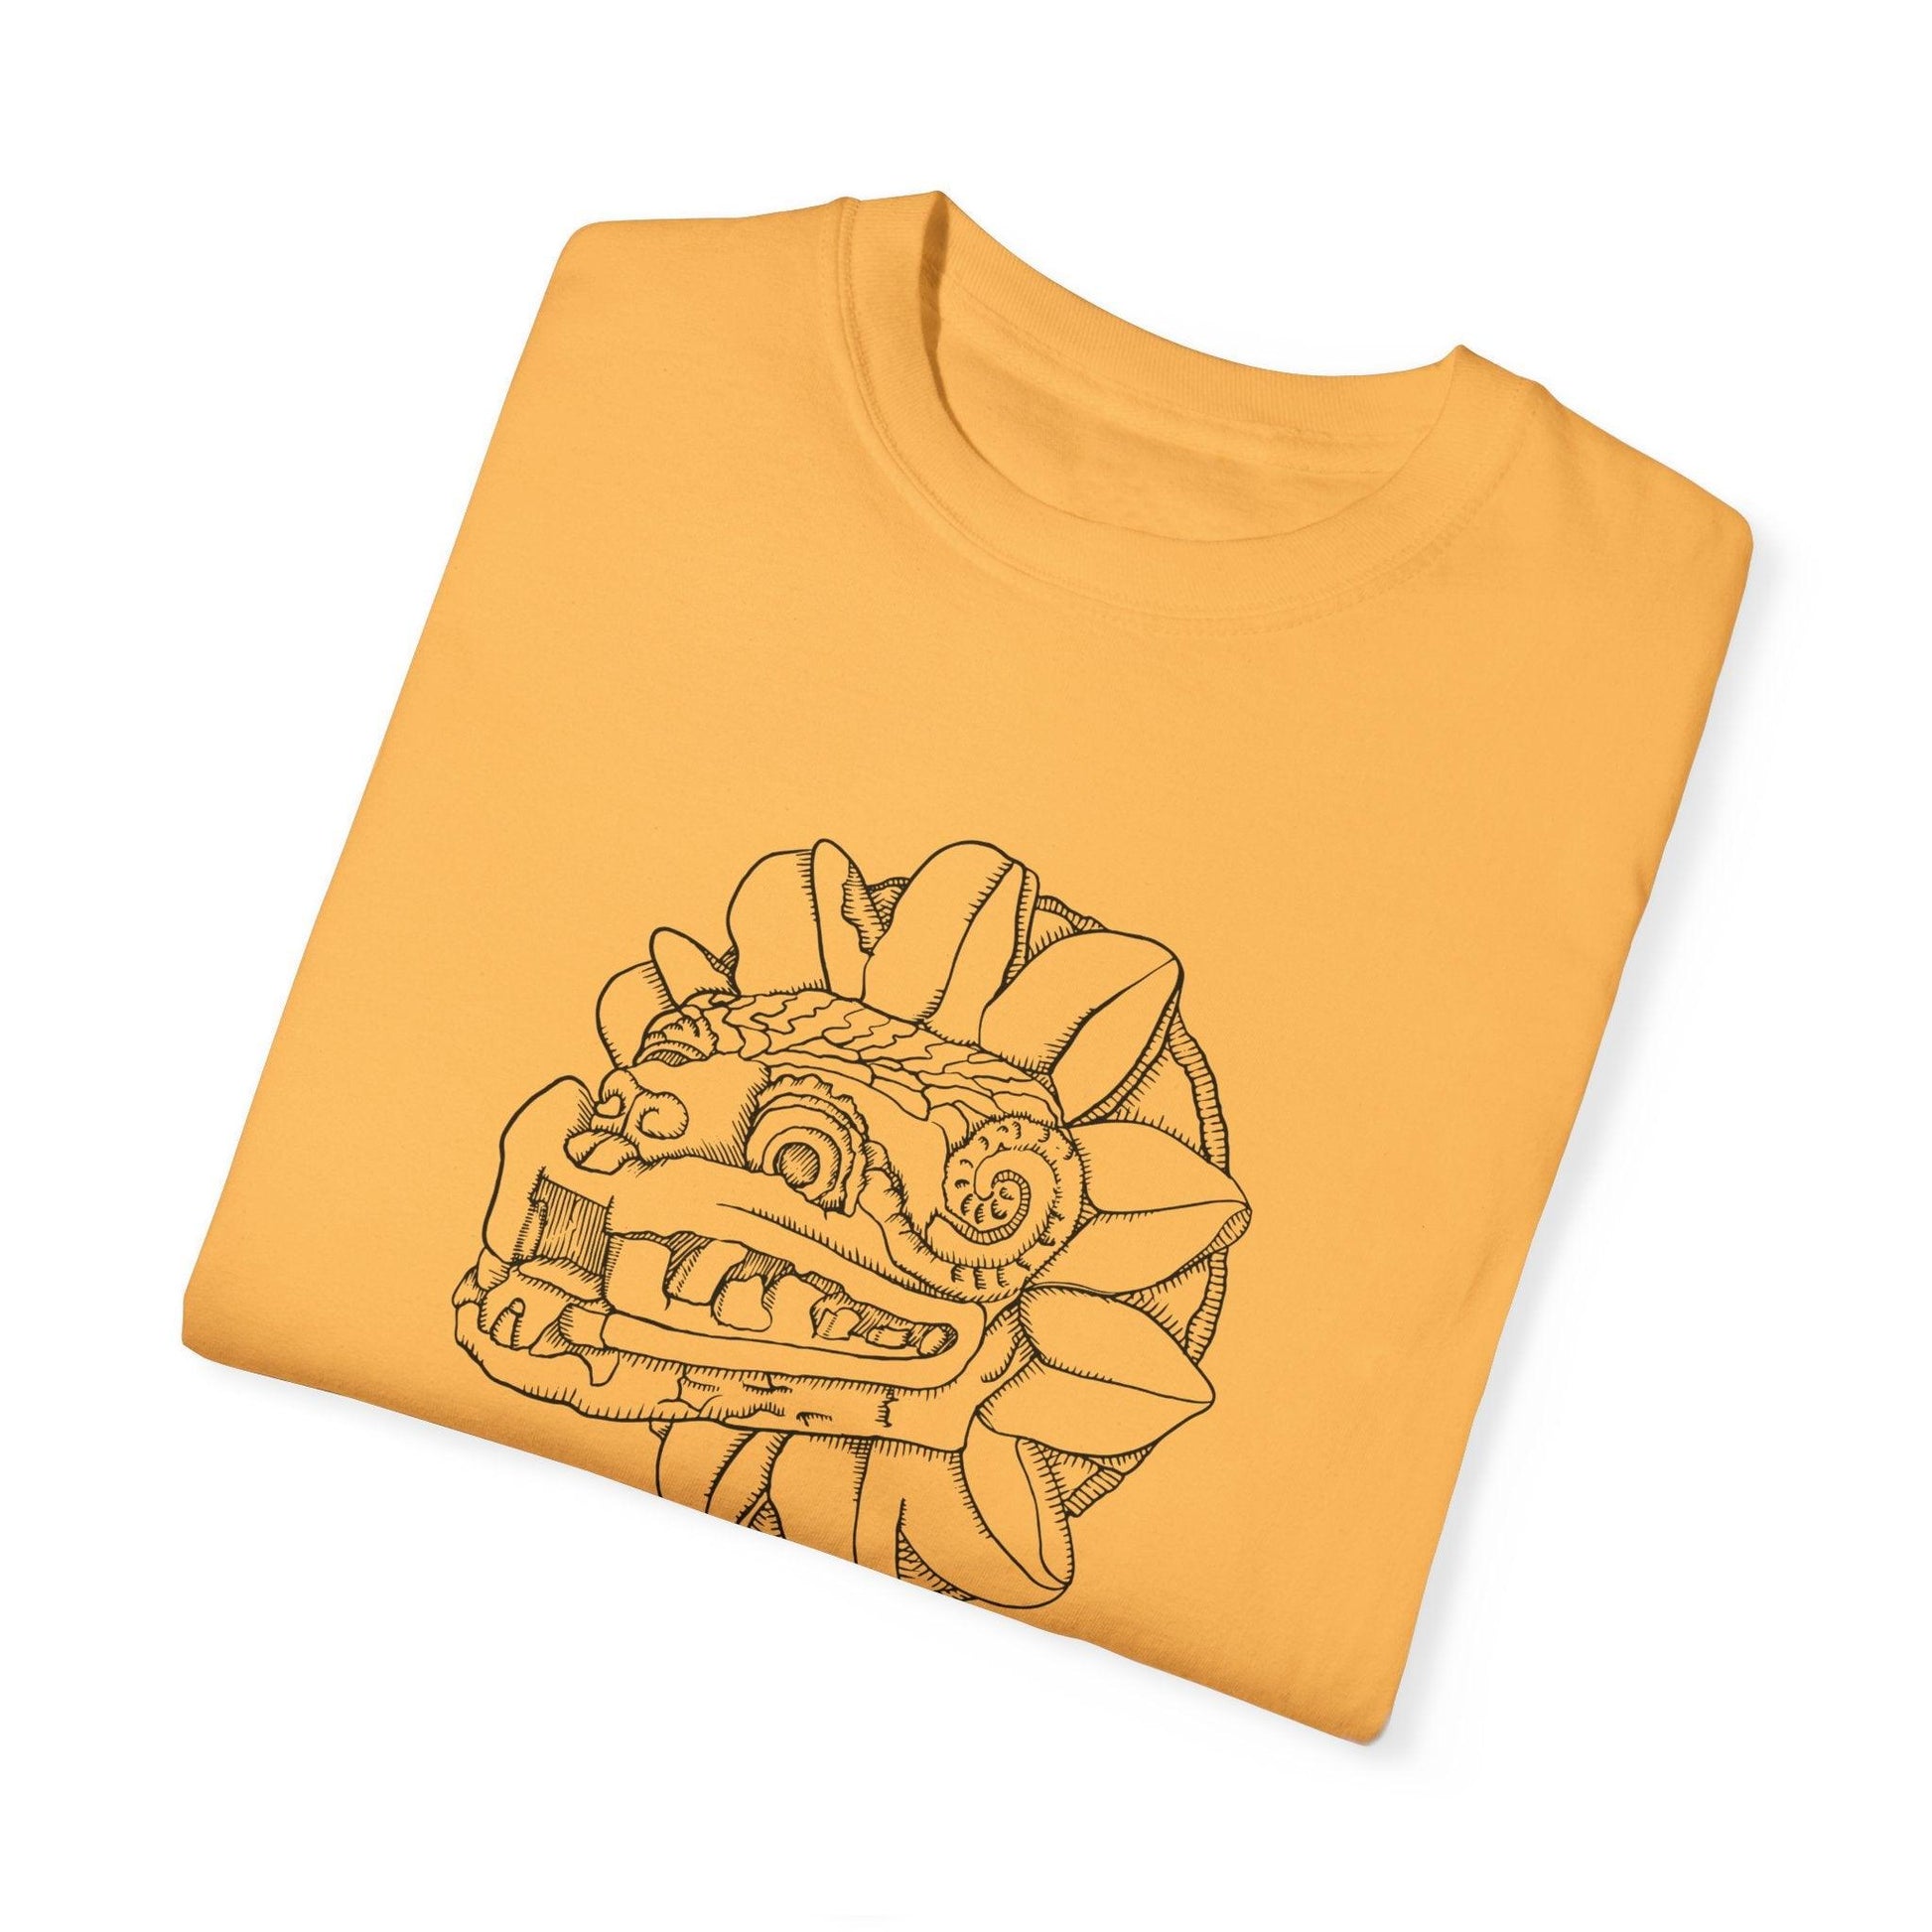 Quetzacoatl Aztec Snake Premium Aztec Drawn T-shirt - Animal Instinctive